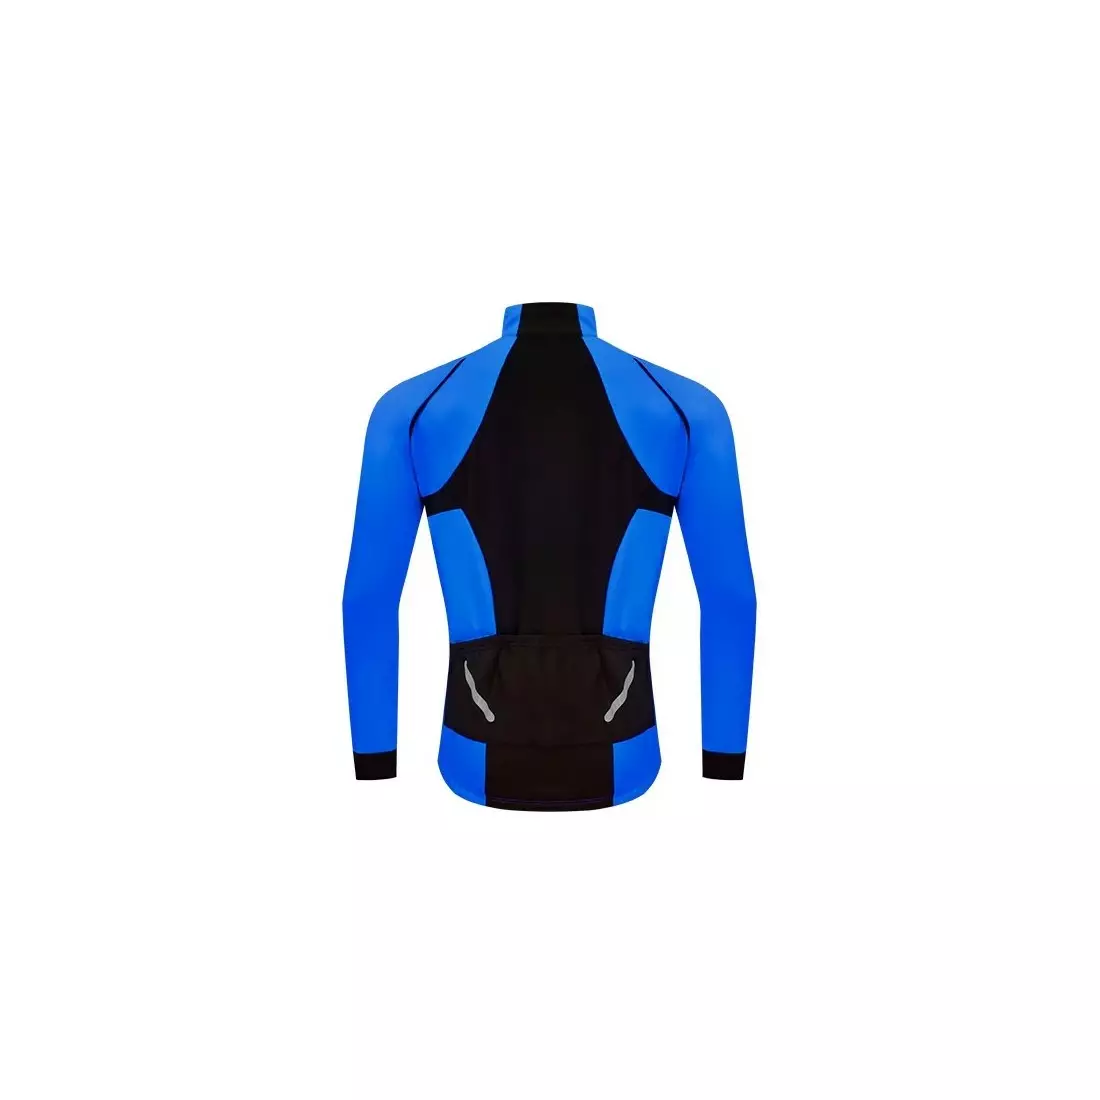 WOSAWE pánska zimná cyklistická bunda Softshell, Modrá BL277